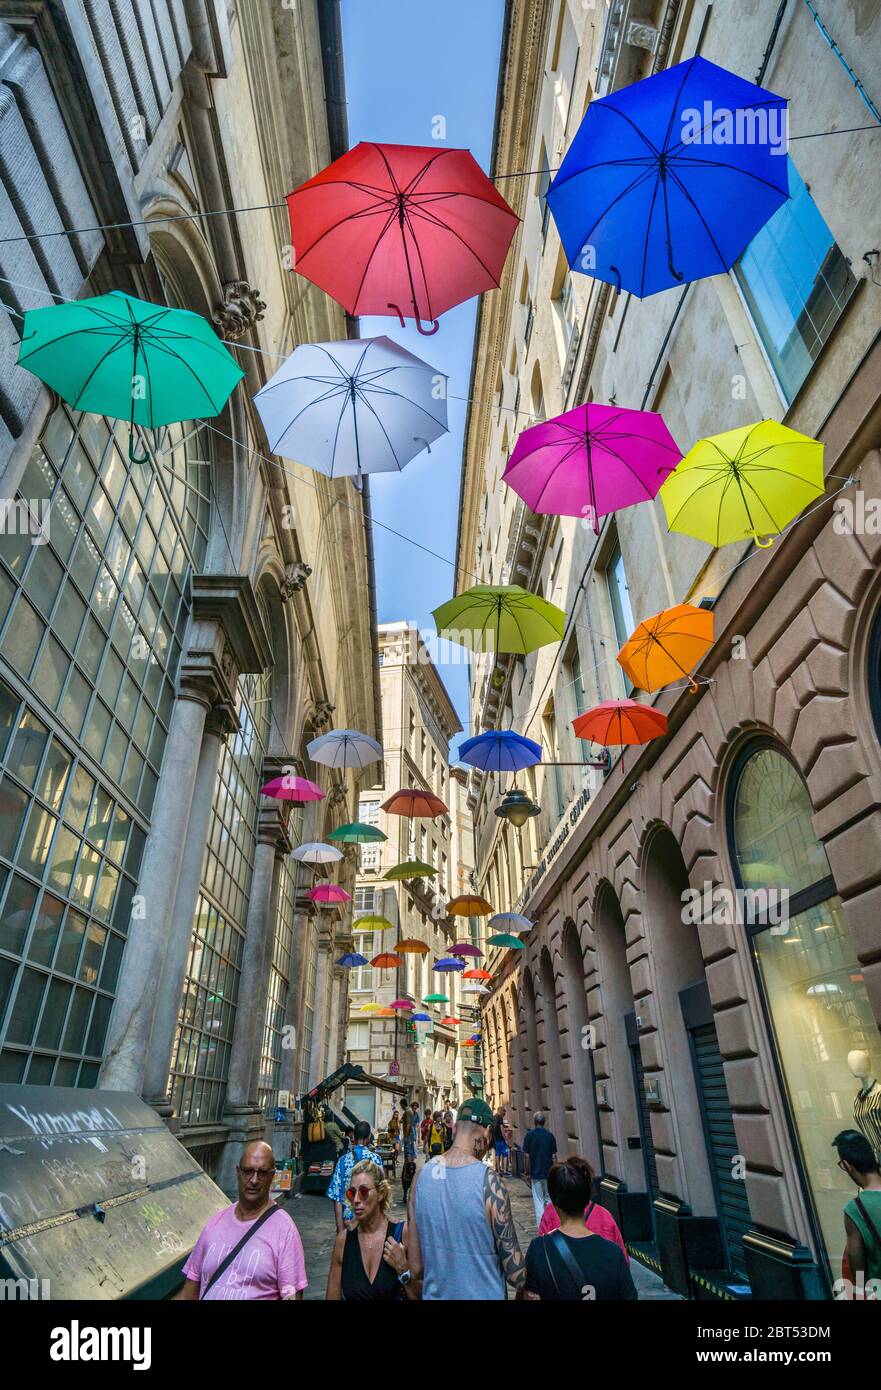 umbrellas suspended in Via Banchi in the historic city center of Genoa, Liguria, Italy Stock Photo